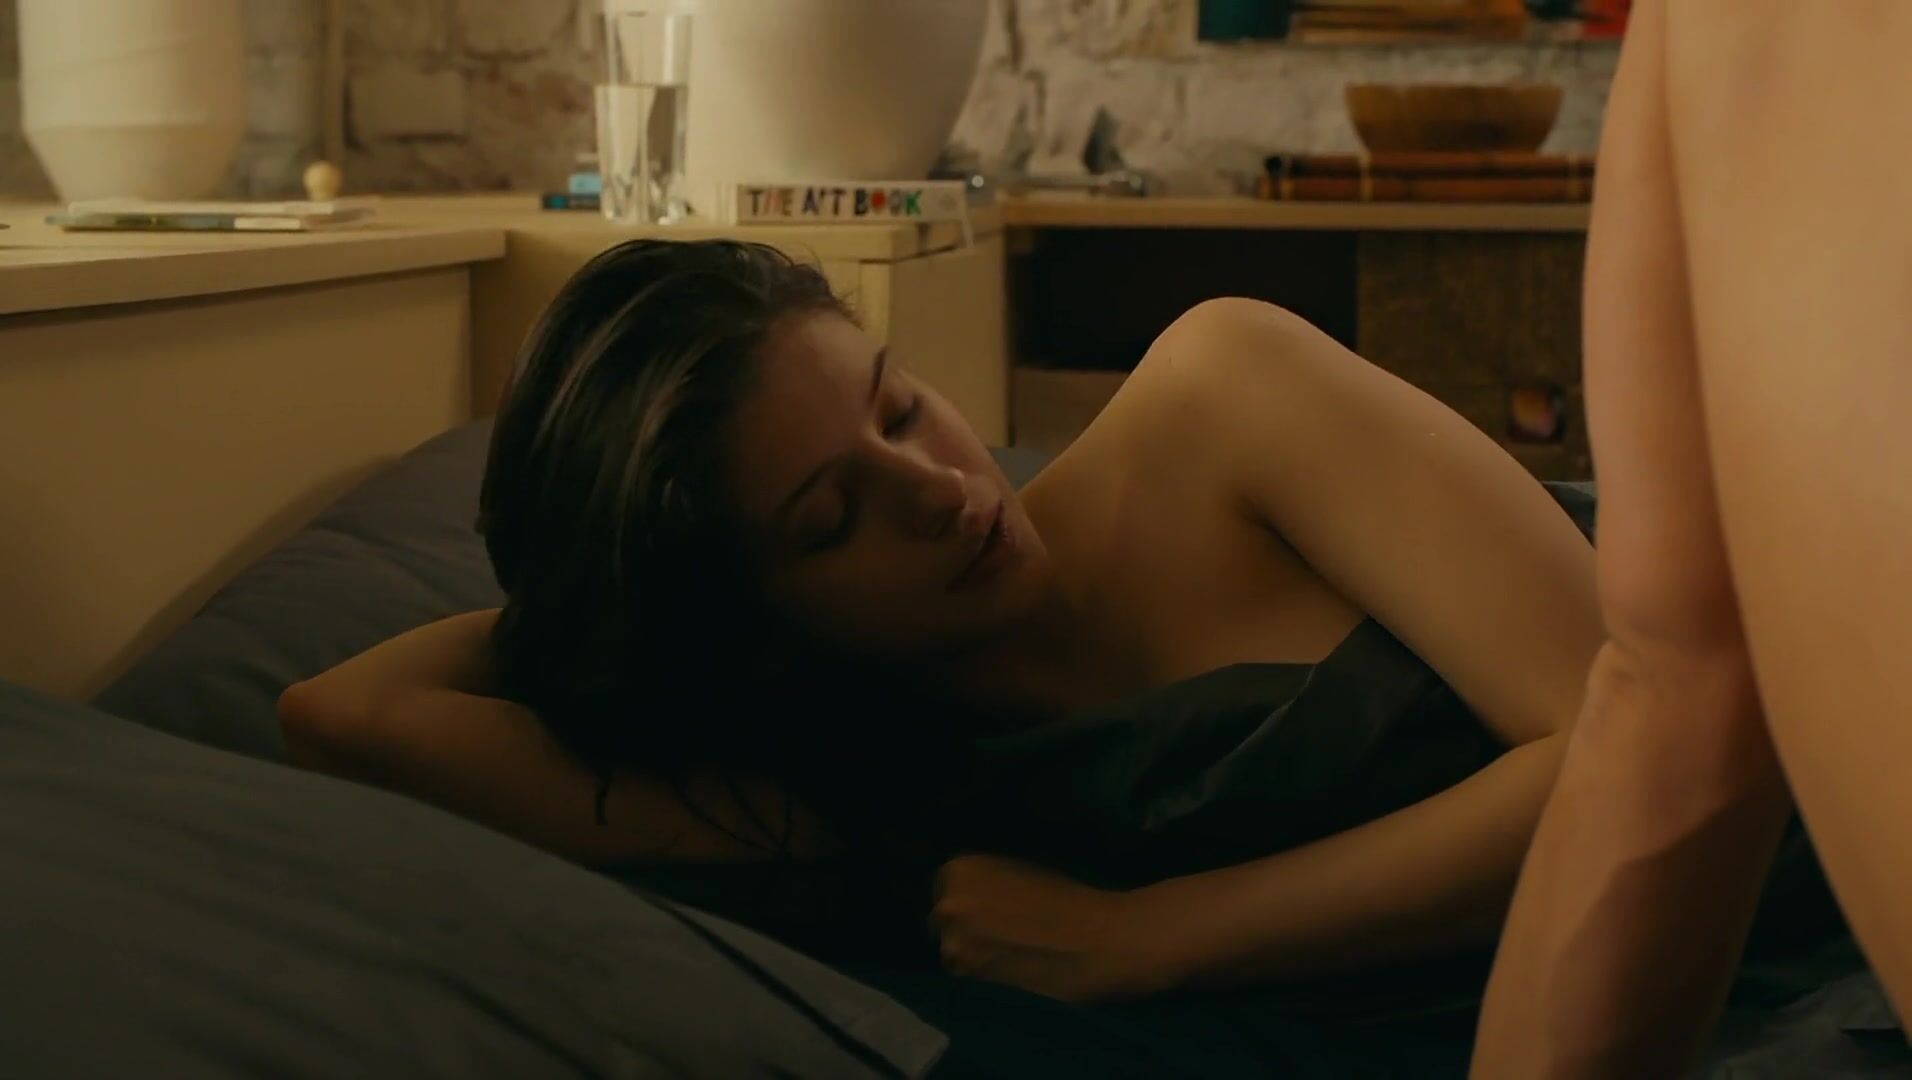 Argentino Teen Anna Chipovskaya nude in nude scene from Russian drama movie Pure Art (2016) Bizarre